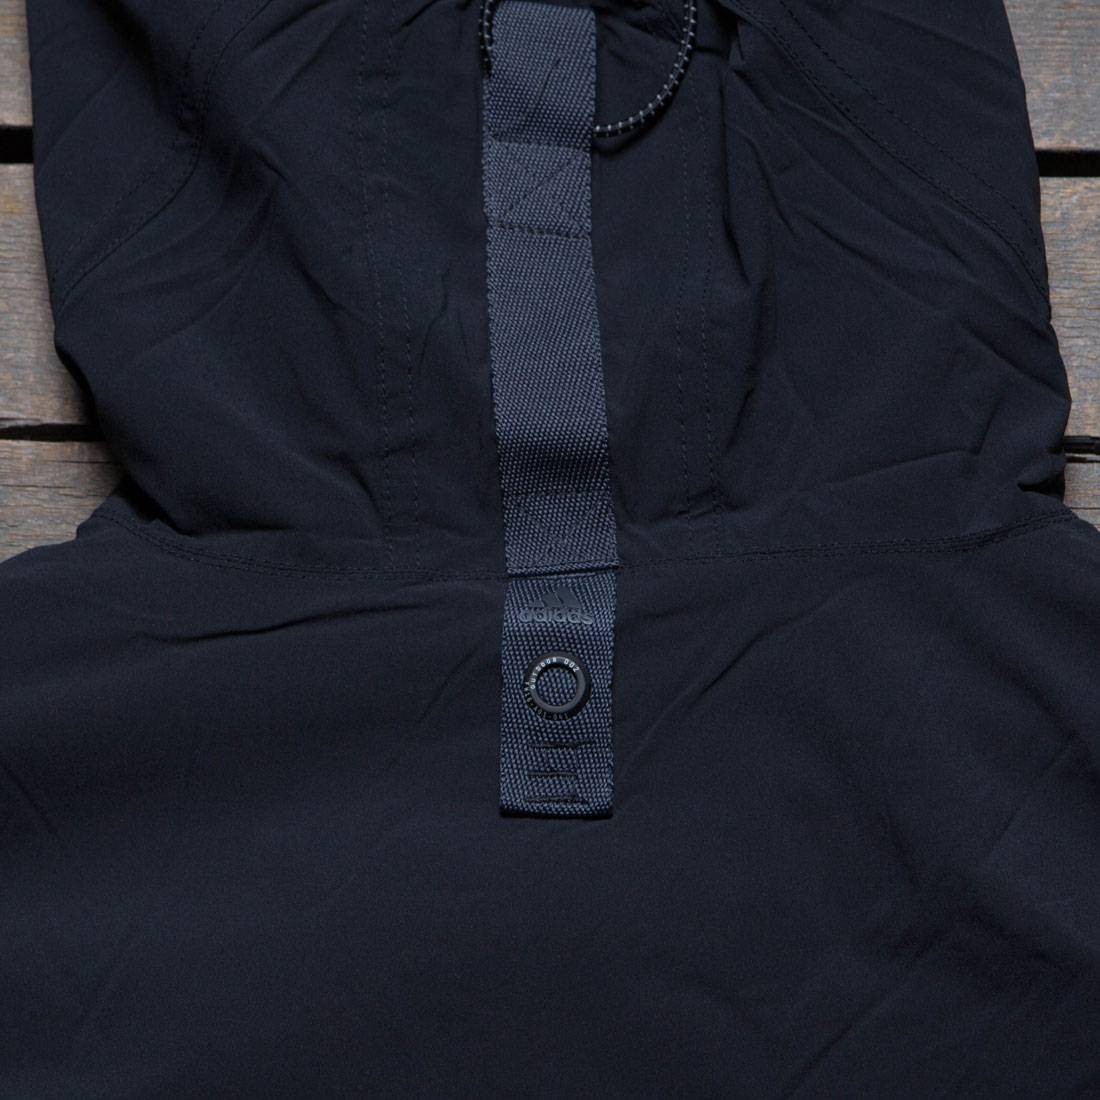 Adidas Consortium Day One Men Softshell Track Jacket black